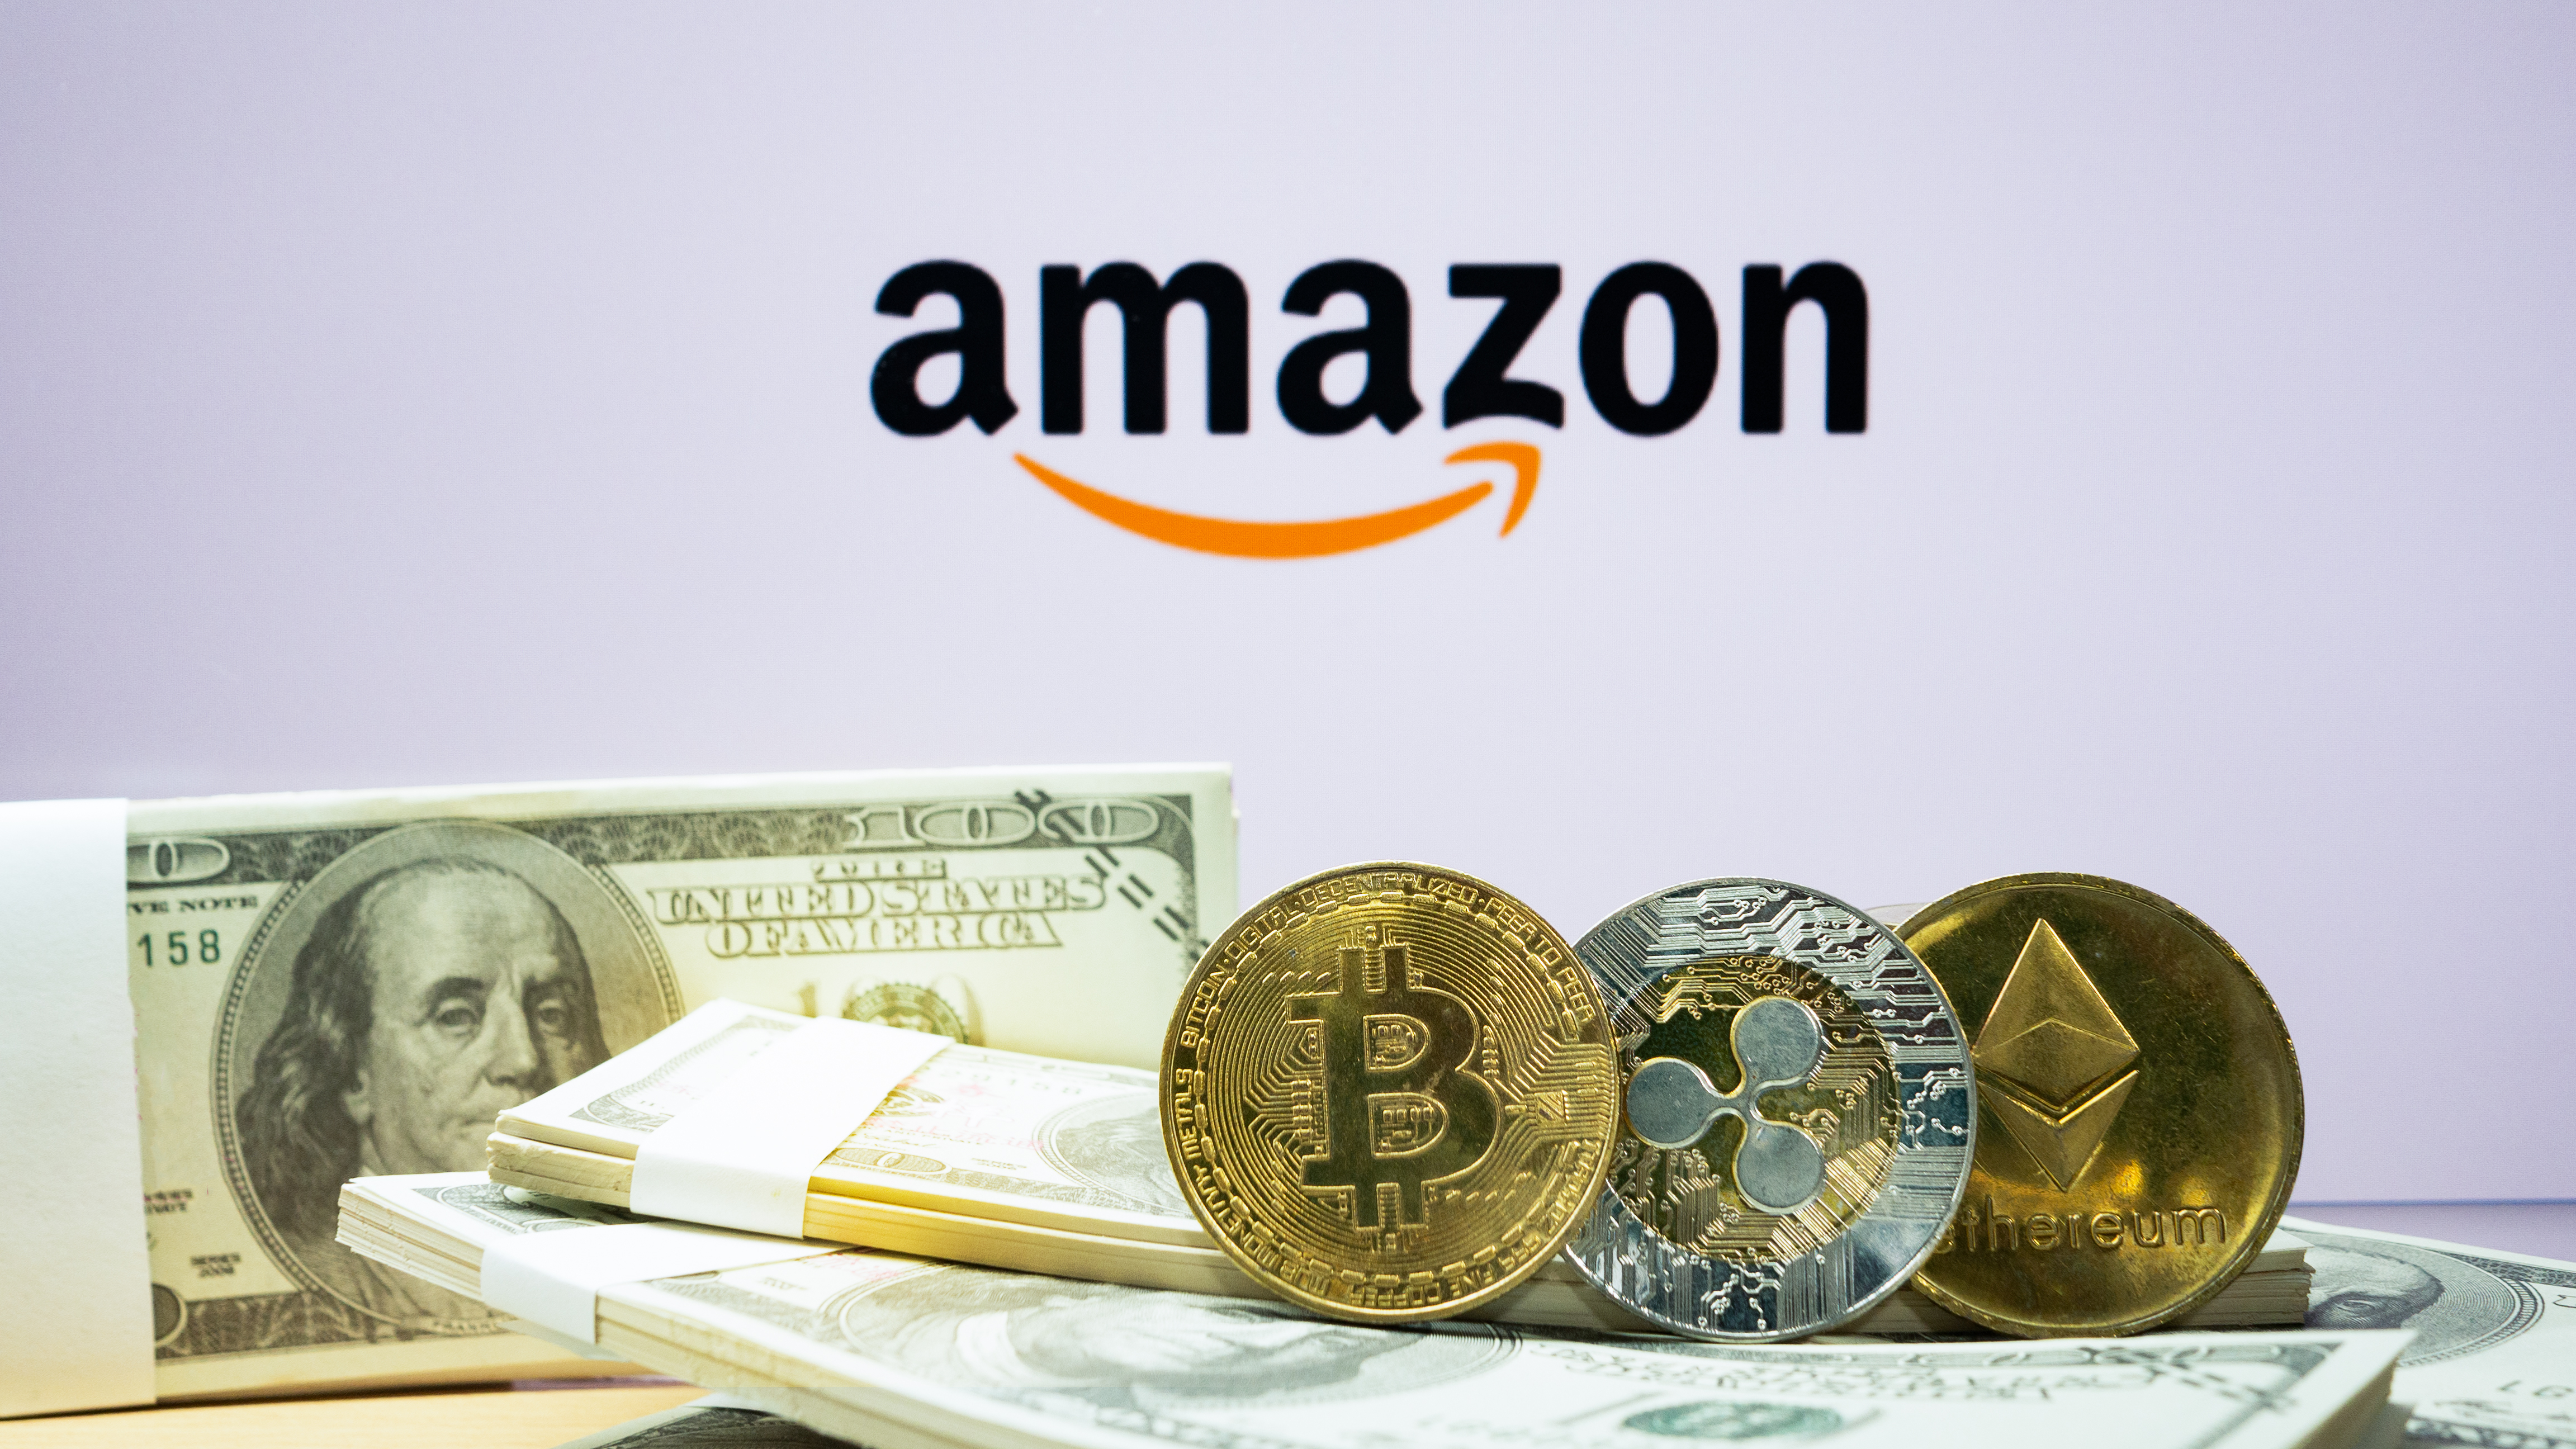 Pay with bitcoin on amazon цена биткоина на сегодня в долларах